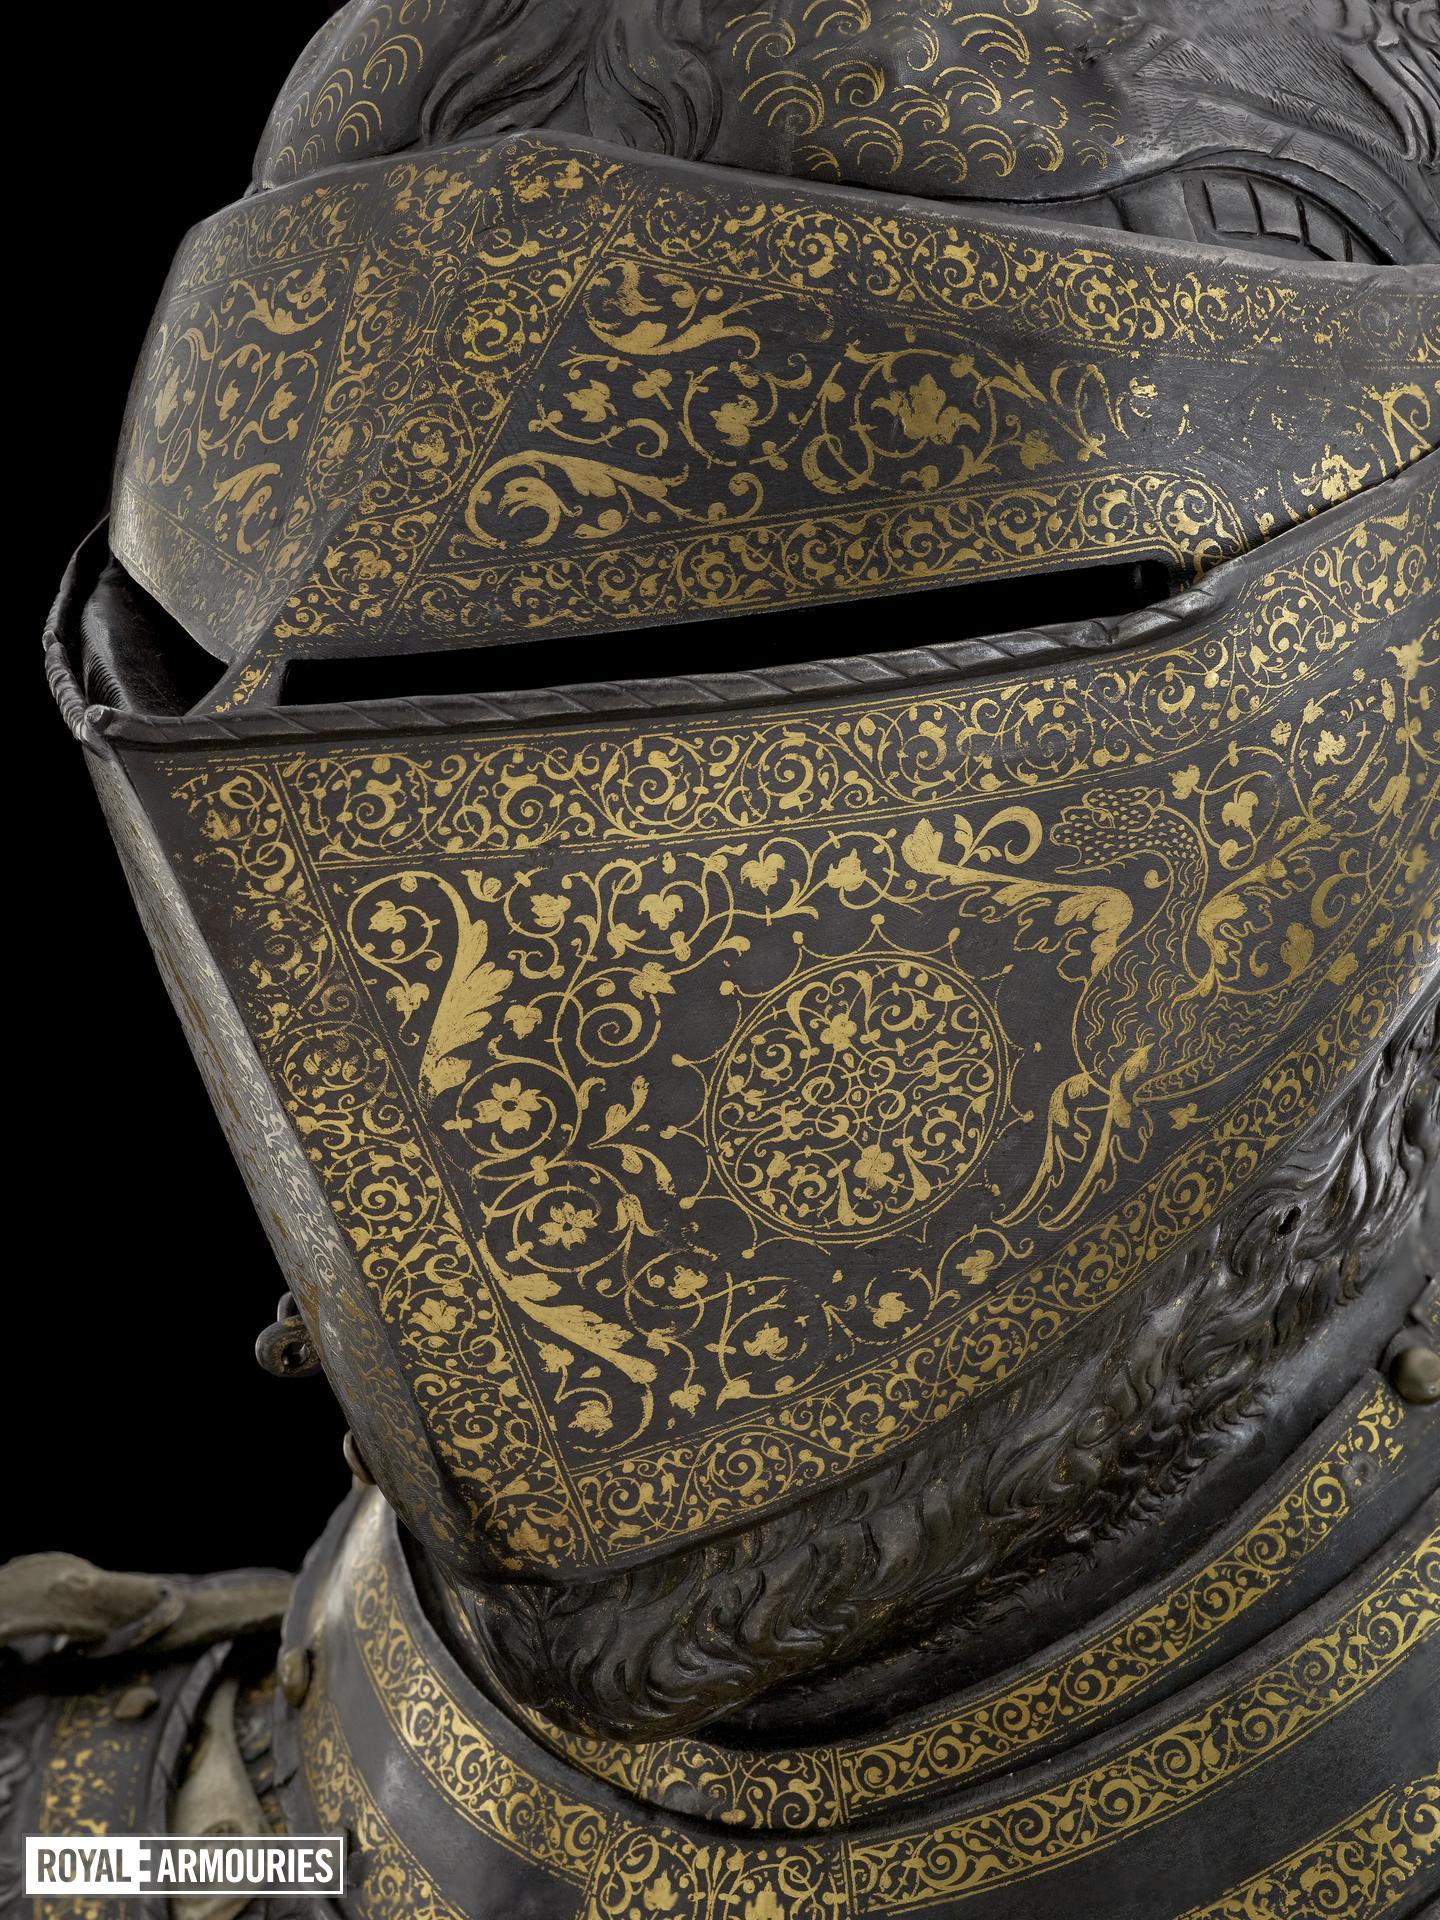 General 1440x1920 armor cuirass engraving gold engravings knight king men portrait display european black background